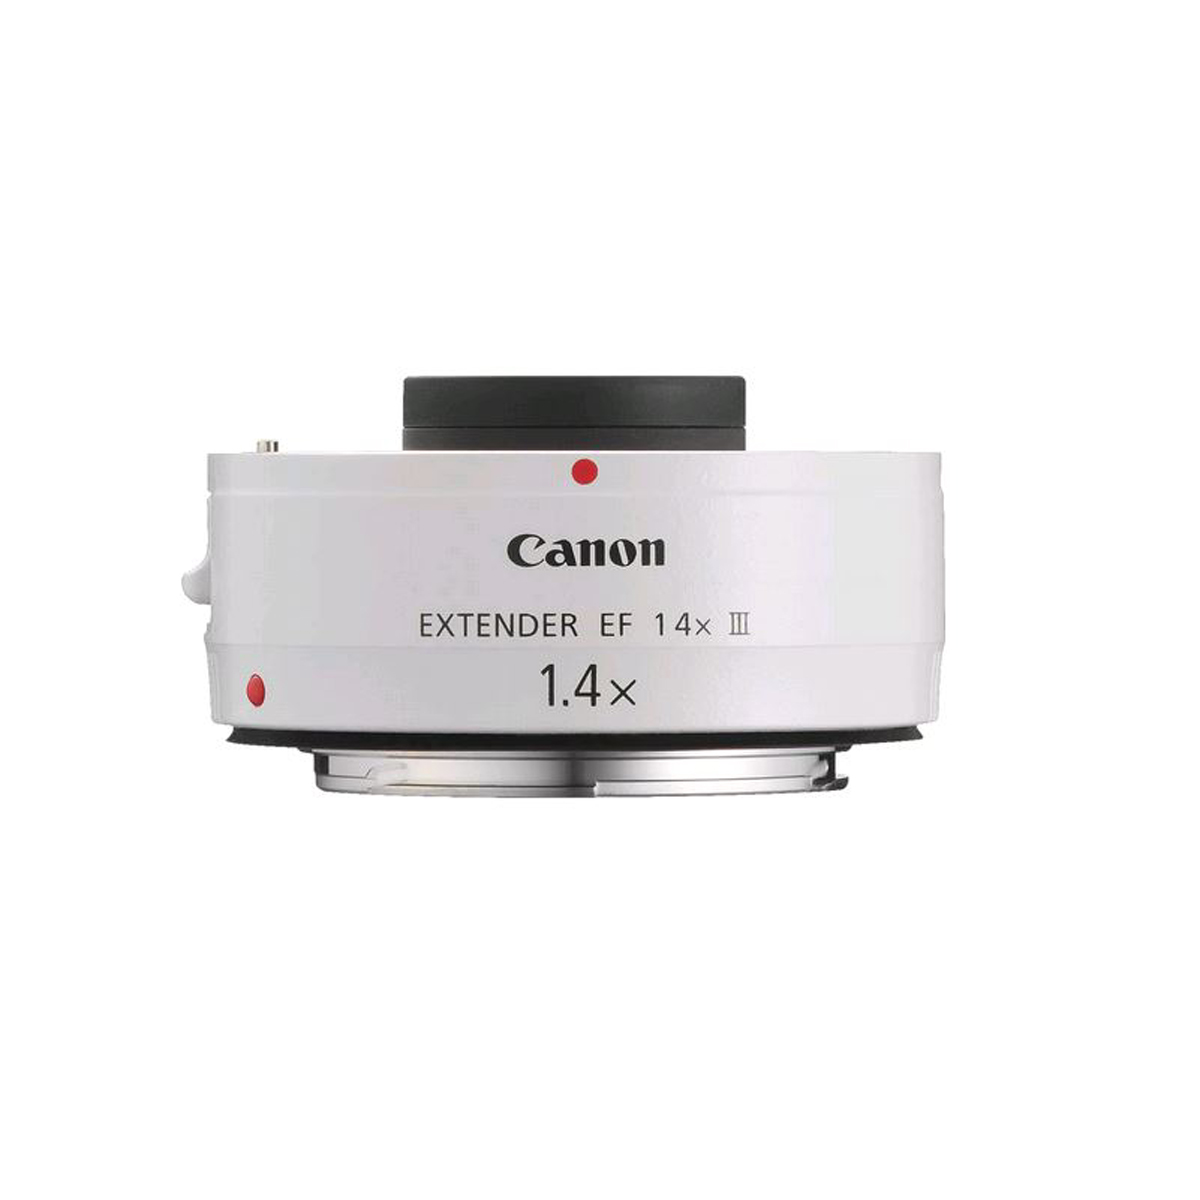 Miete Canon Extender EF 1.4x III